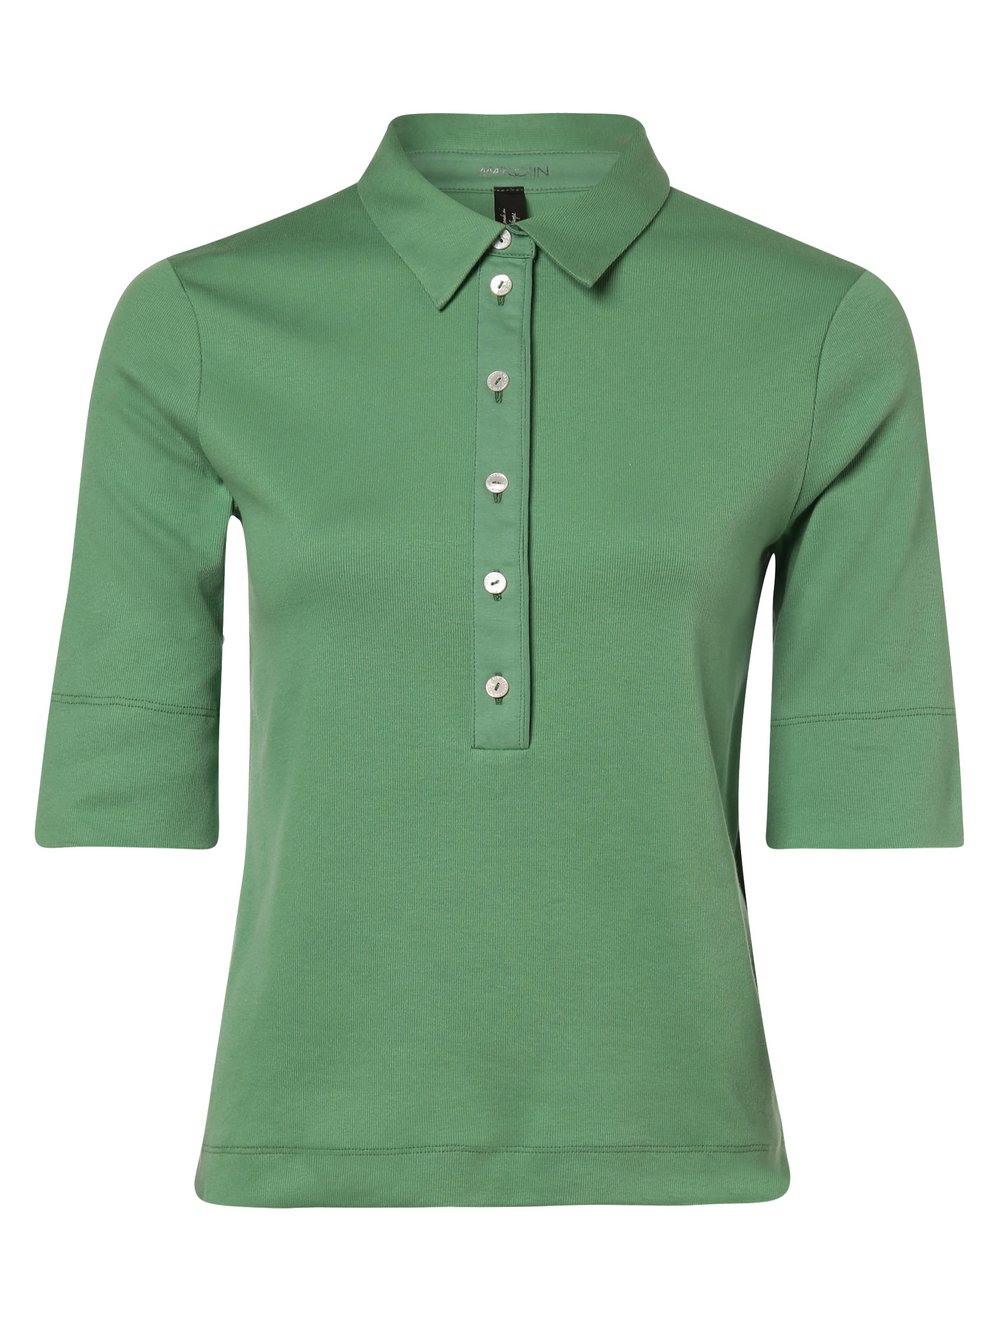 Marc Cain Collections - Damska koszulka polo, zielony